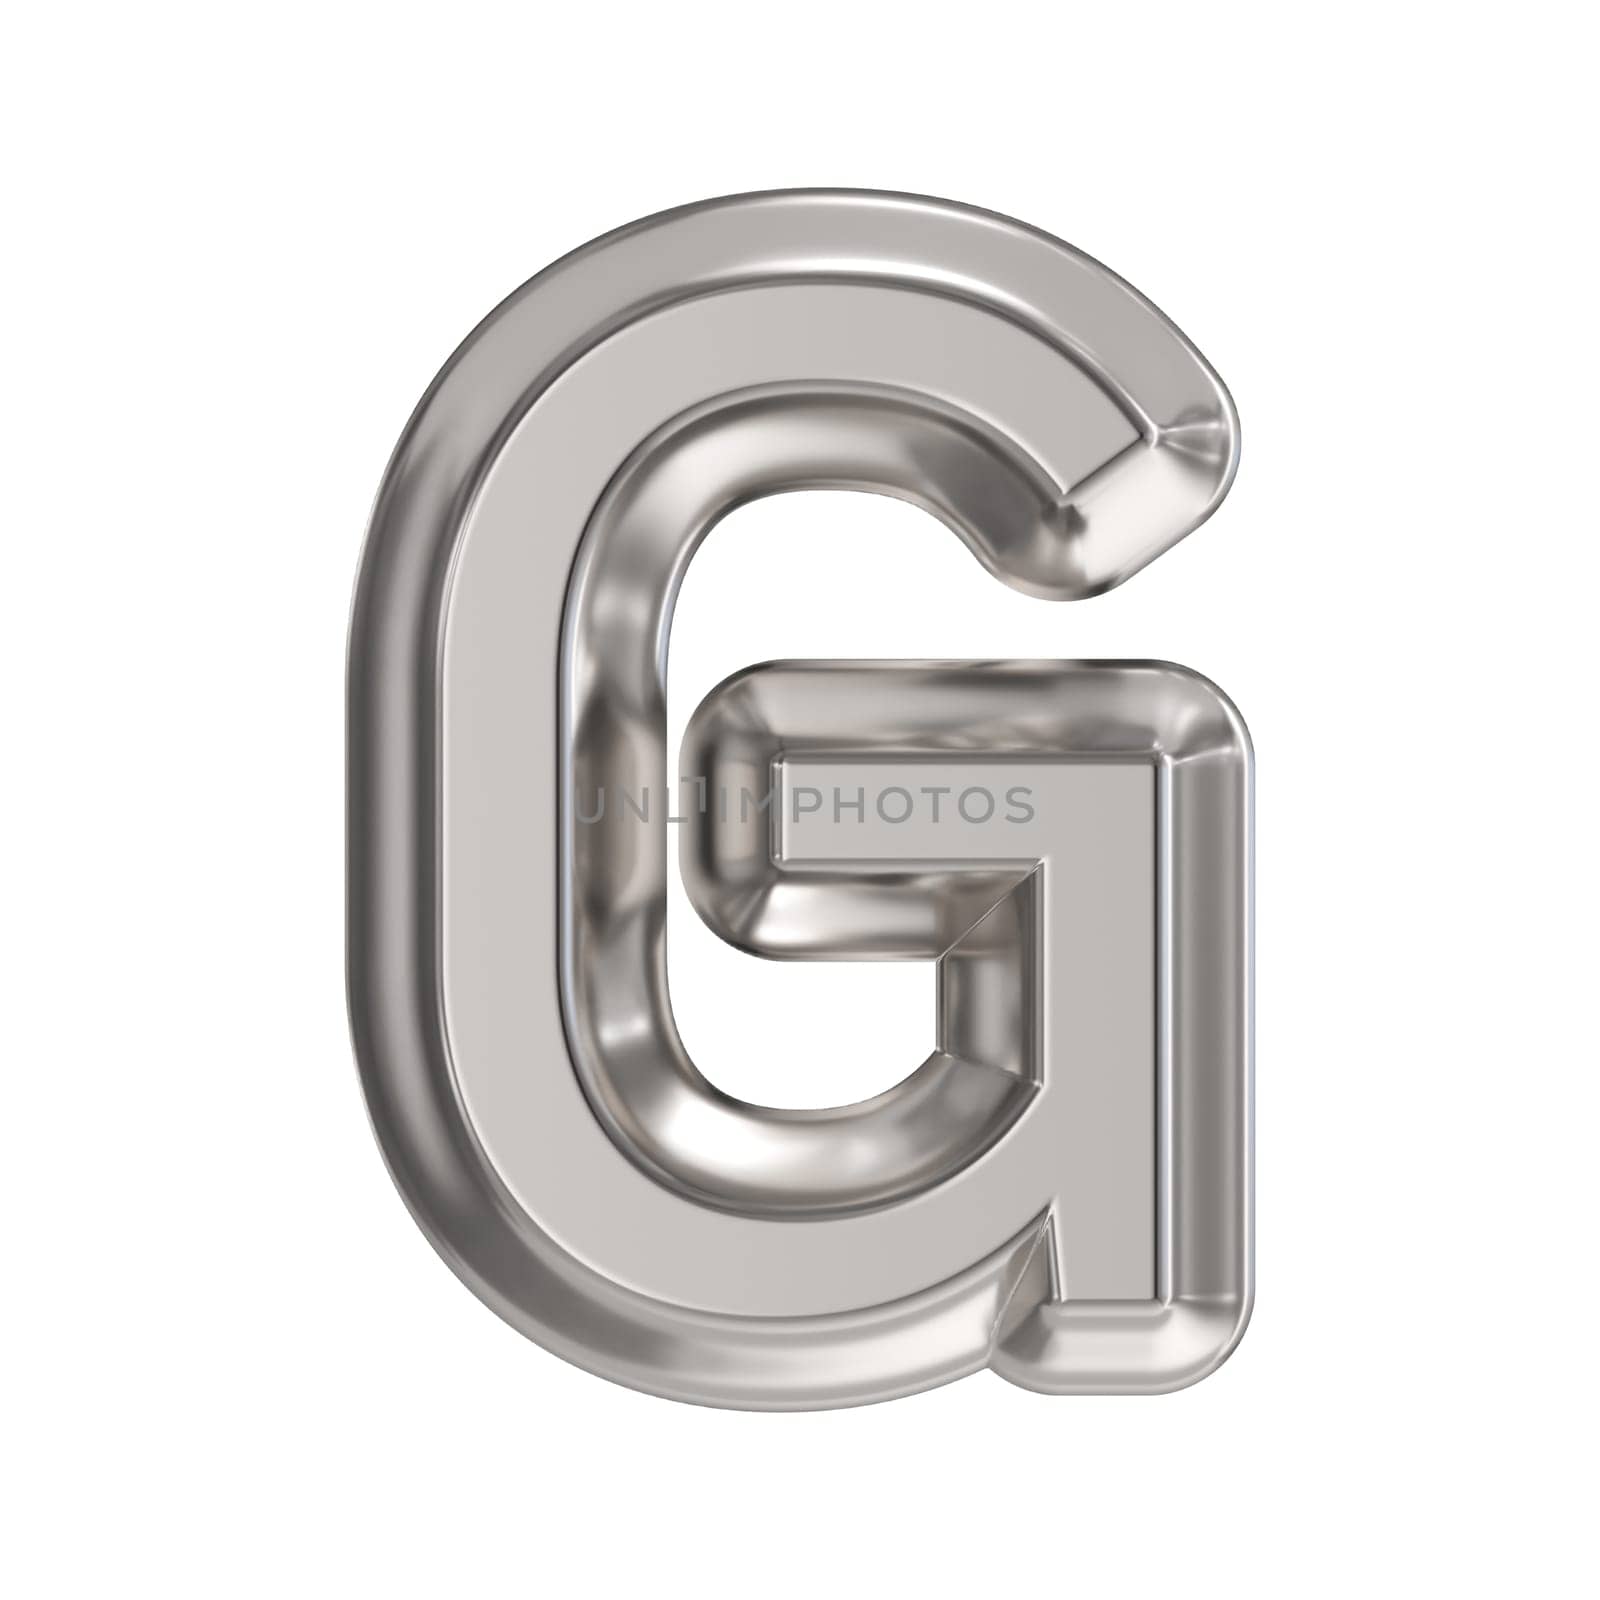 Steel font Letter G 3D rendering illustration isolated on white background